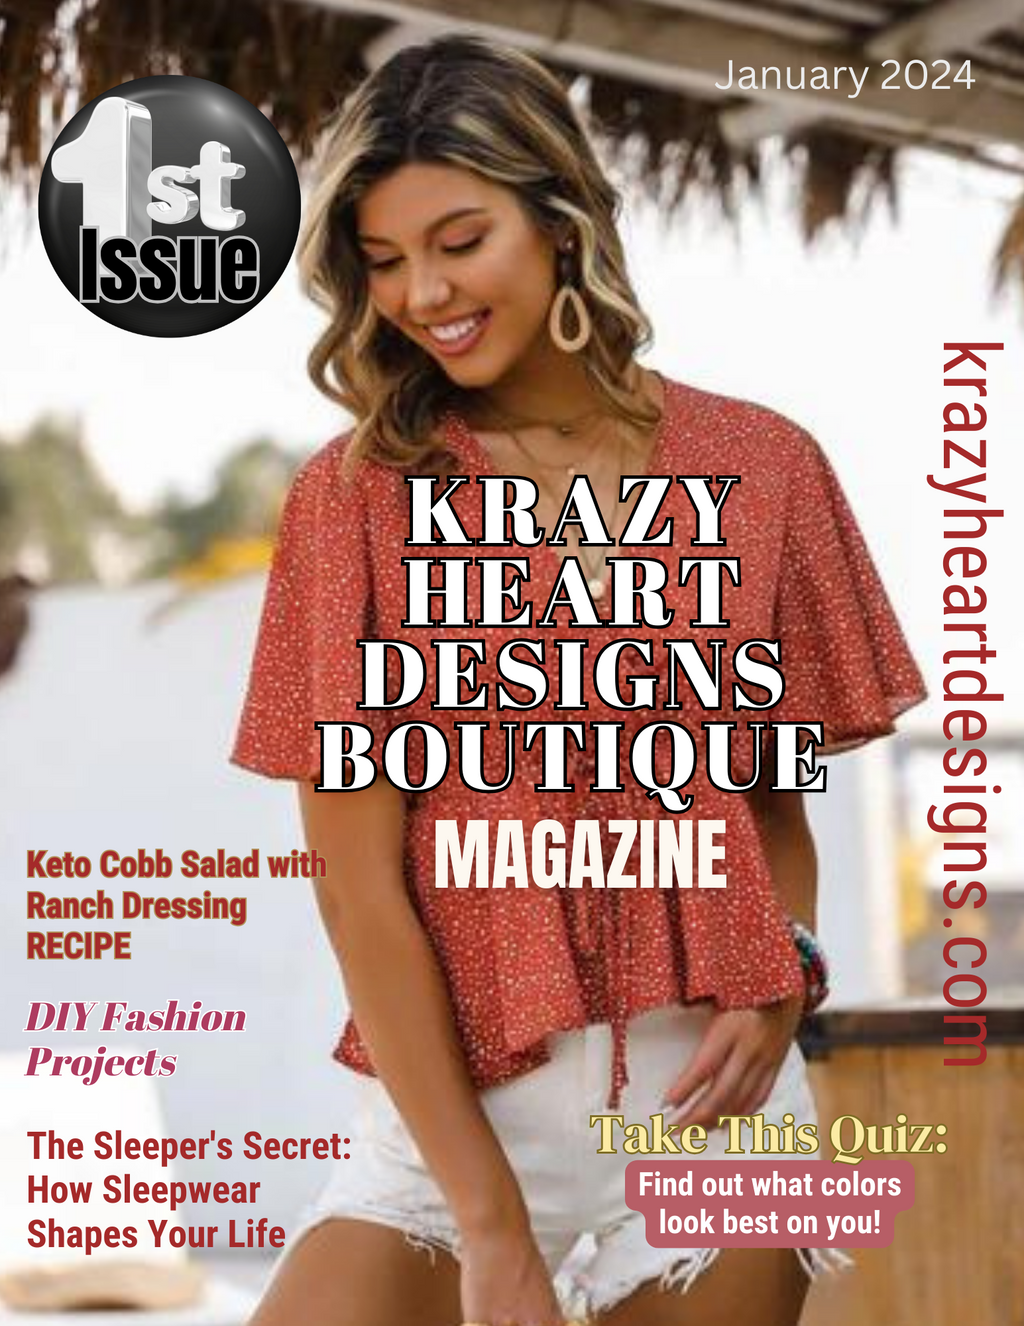 Krazy Heart Designs Magazine January 2024 Issue (FREE) Magazine Krazy Heart Designs Boutique   